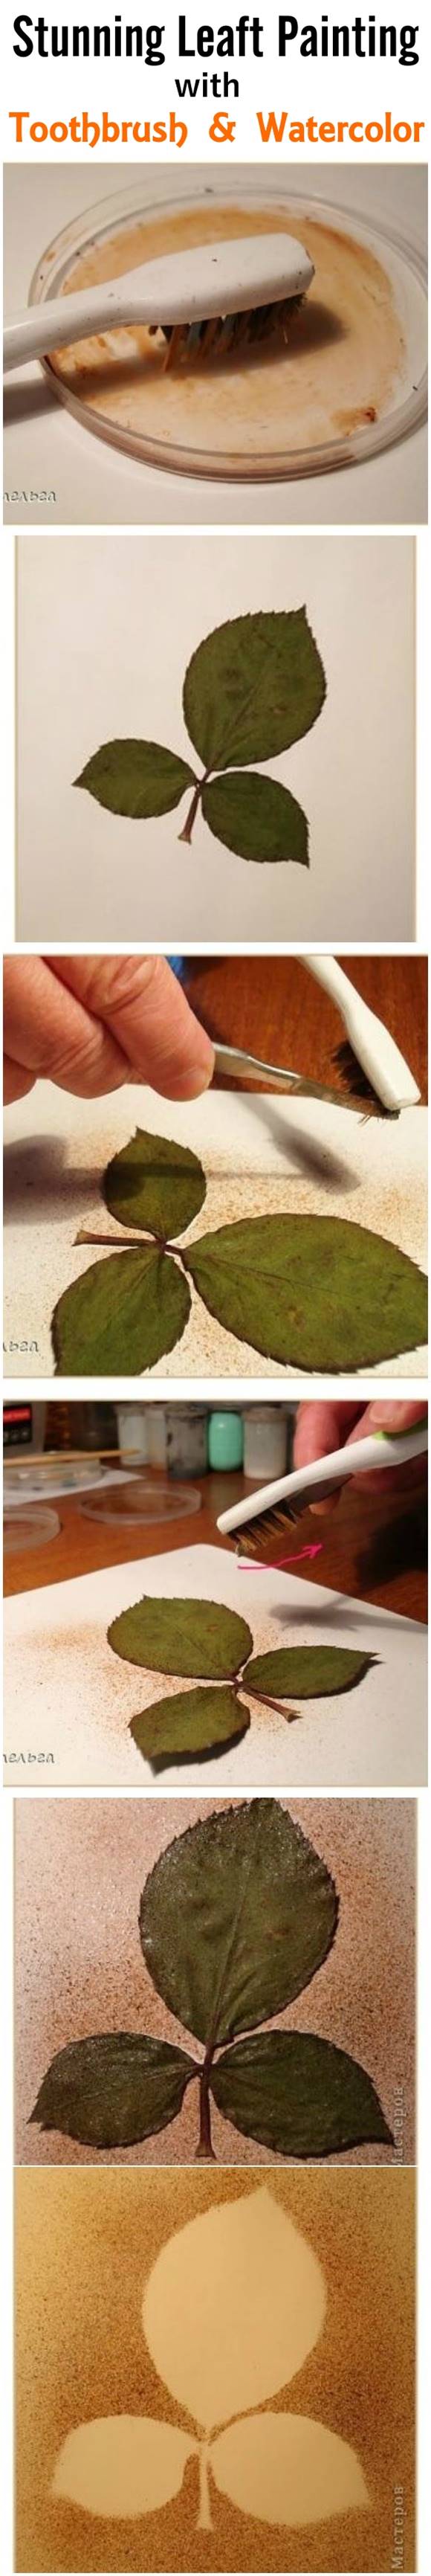 Creative Ideas - DIY Stunning Leaf Painting Using Toothbrush